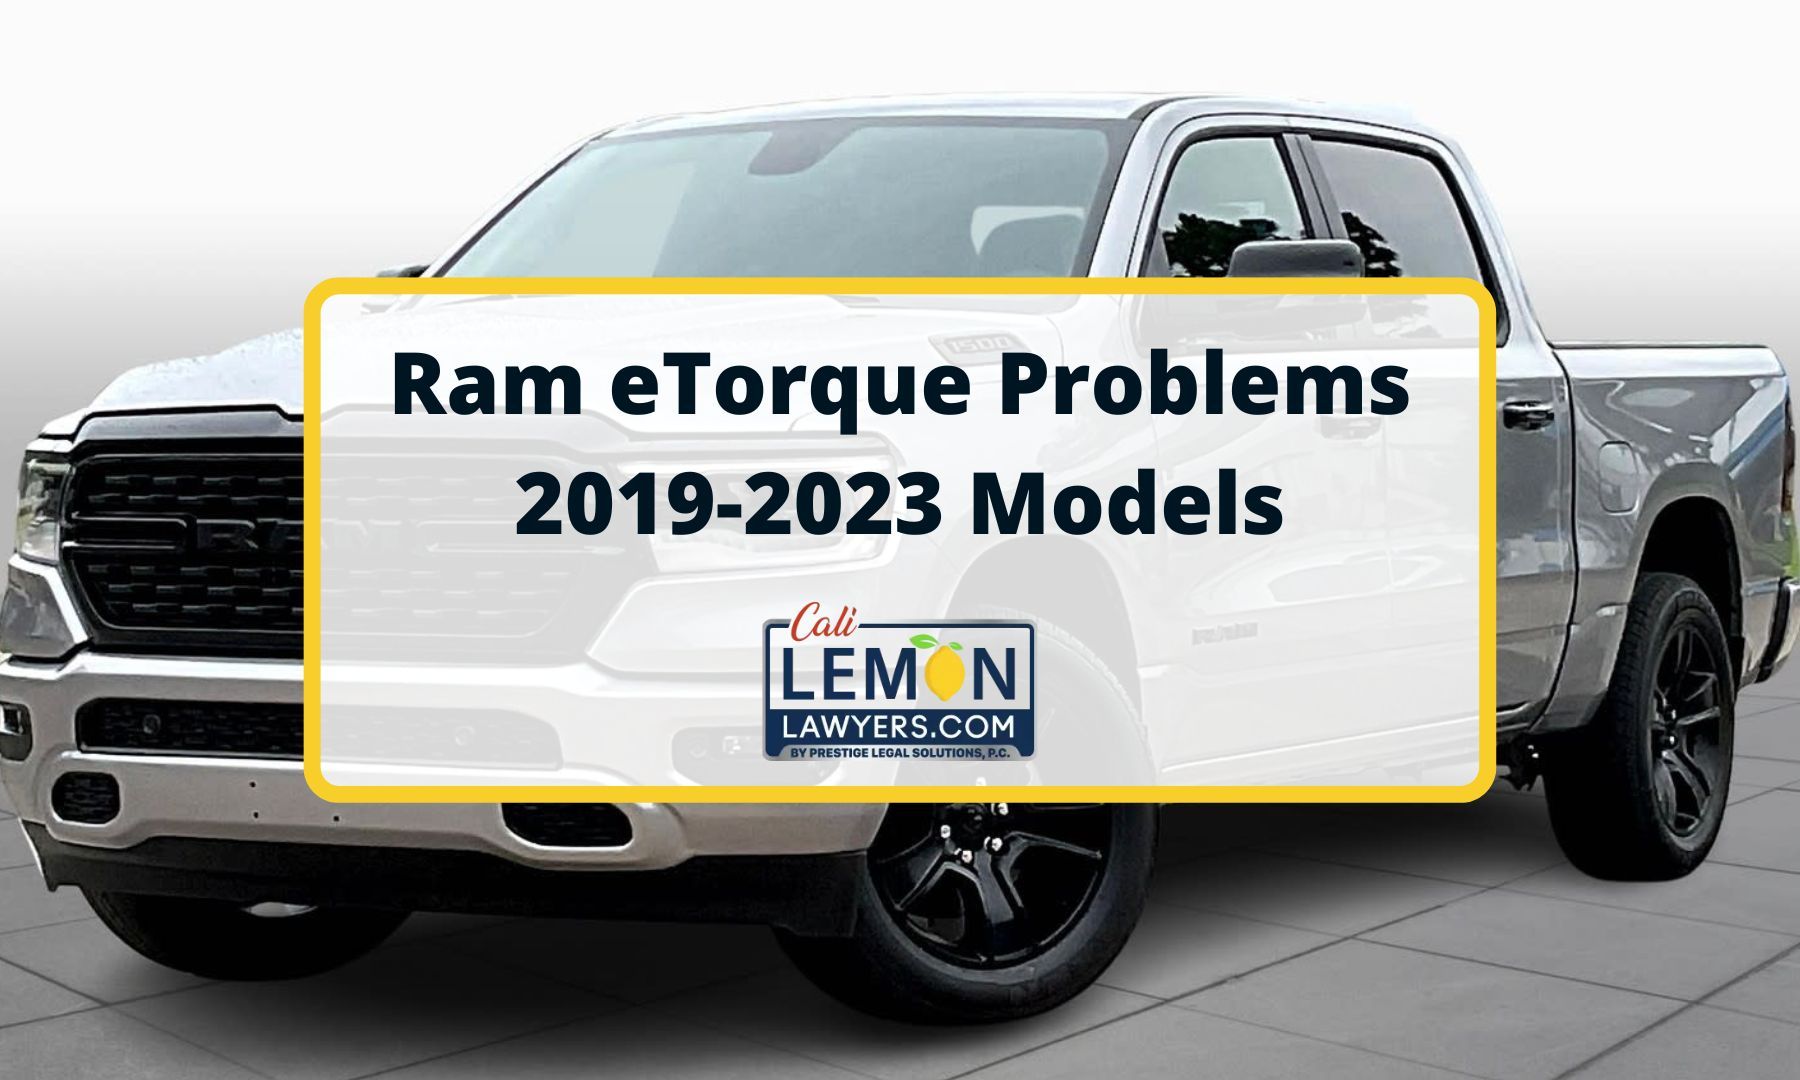 Ram eTorque Problems: 2019-2023 Models